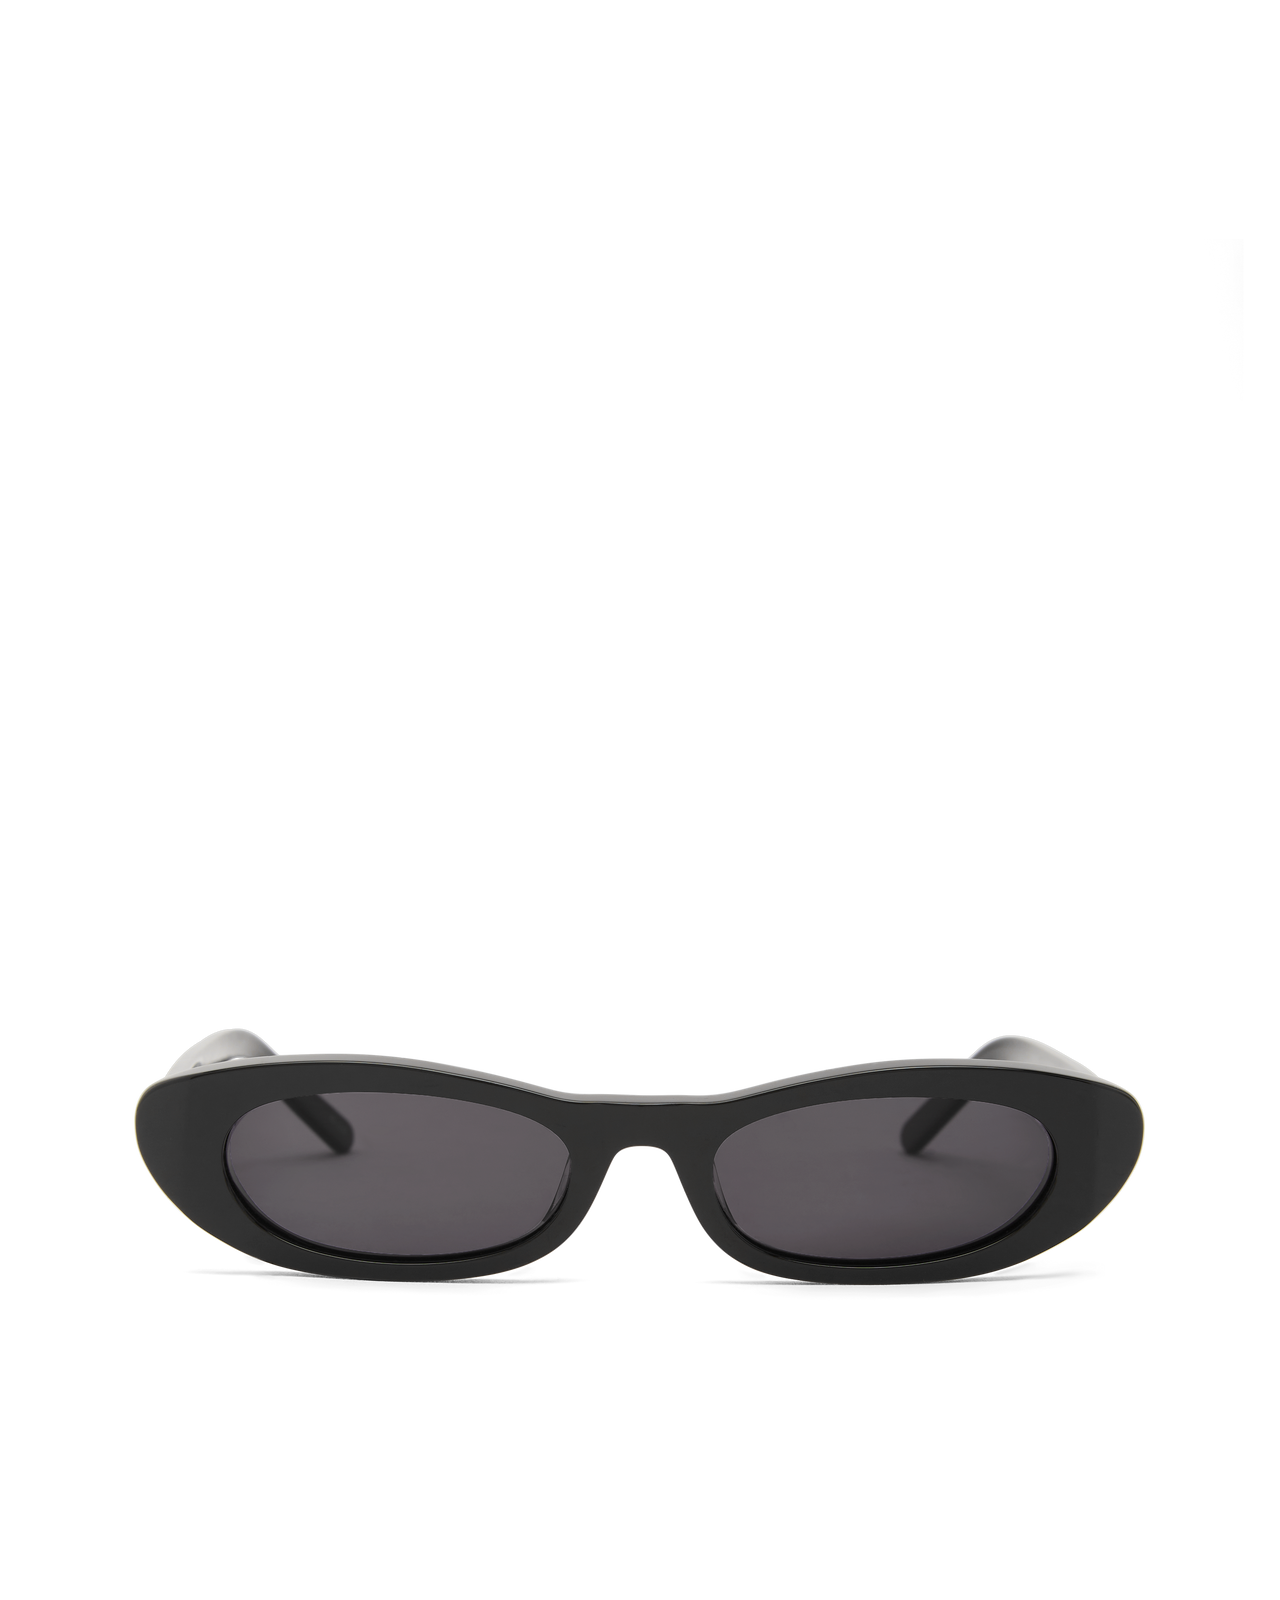 The Poly Sunglasses Black Jet, Sunglass Acc by Banbe | LIT Boutique